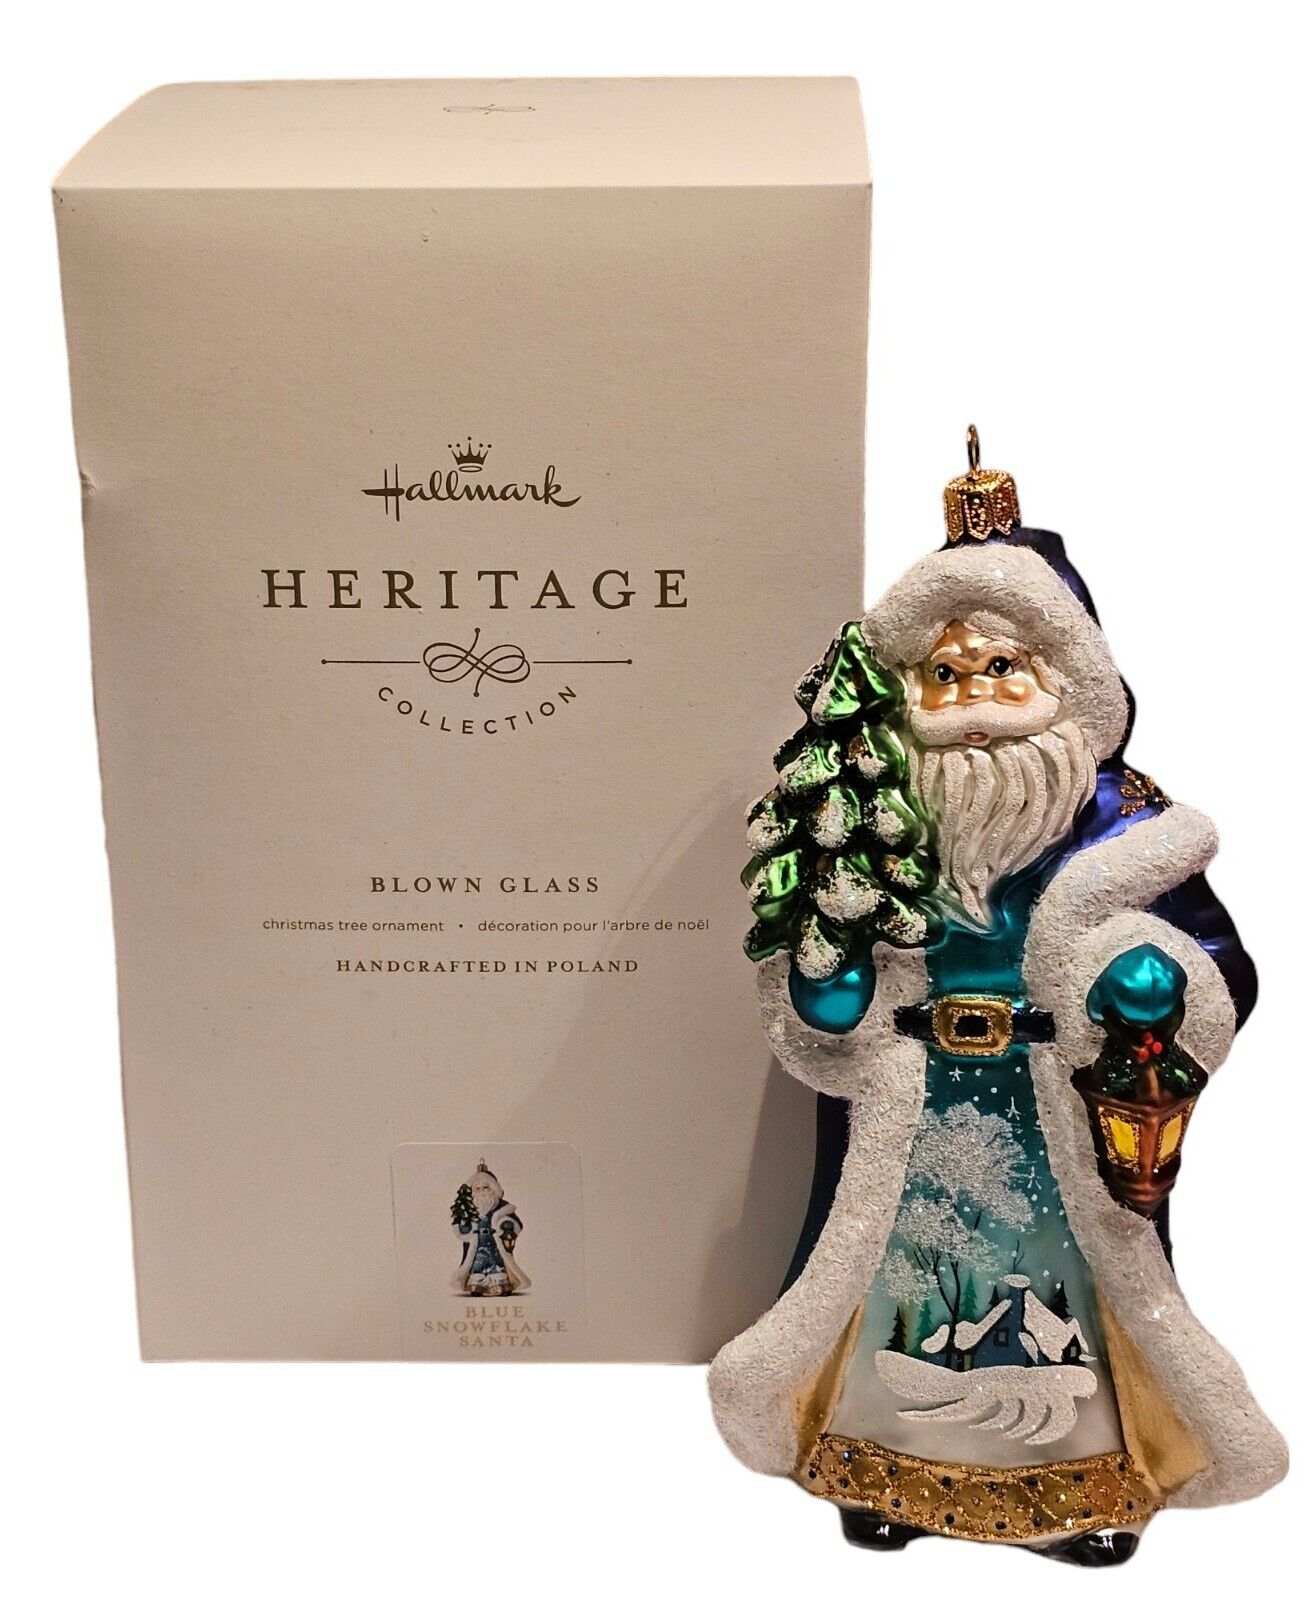 Hallmark Heritage Blue Snowflake Santa Blown Glass Christmas Ornament - Poland